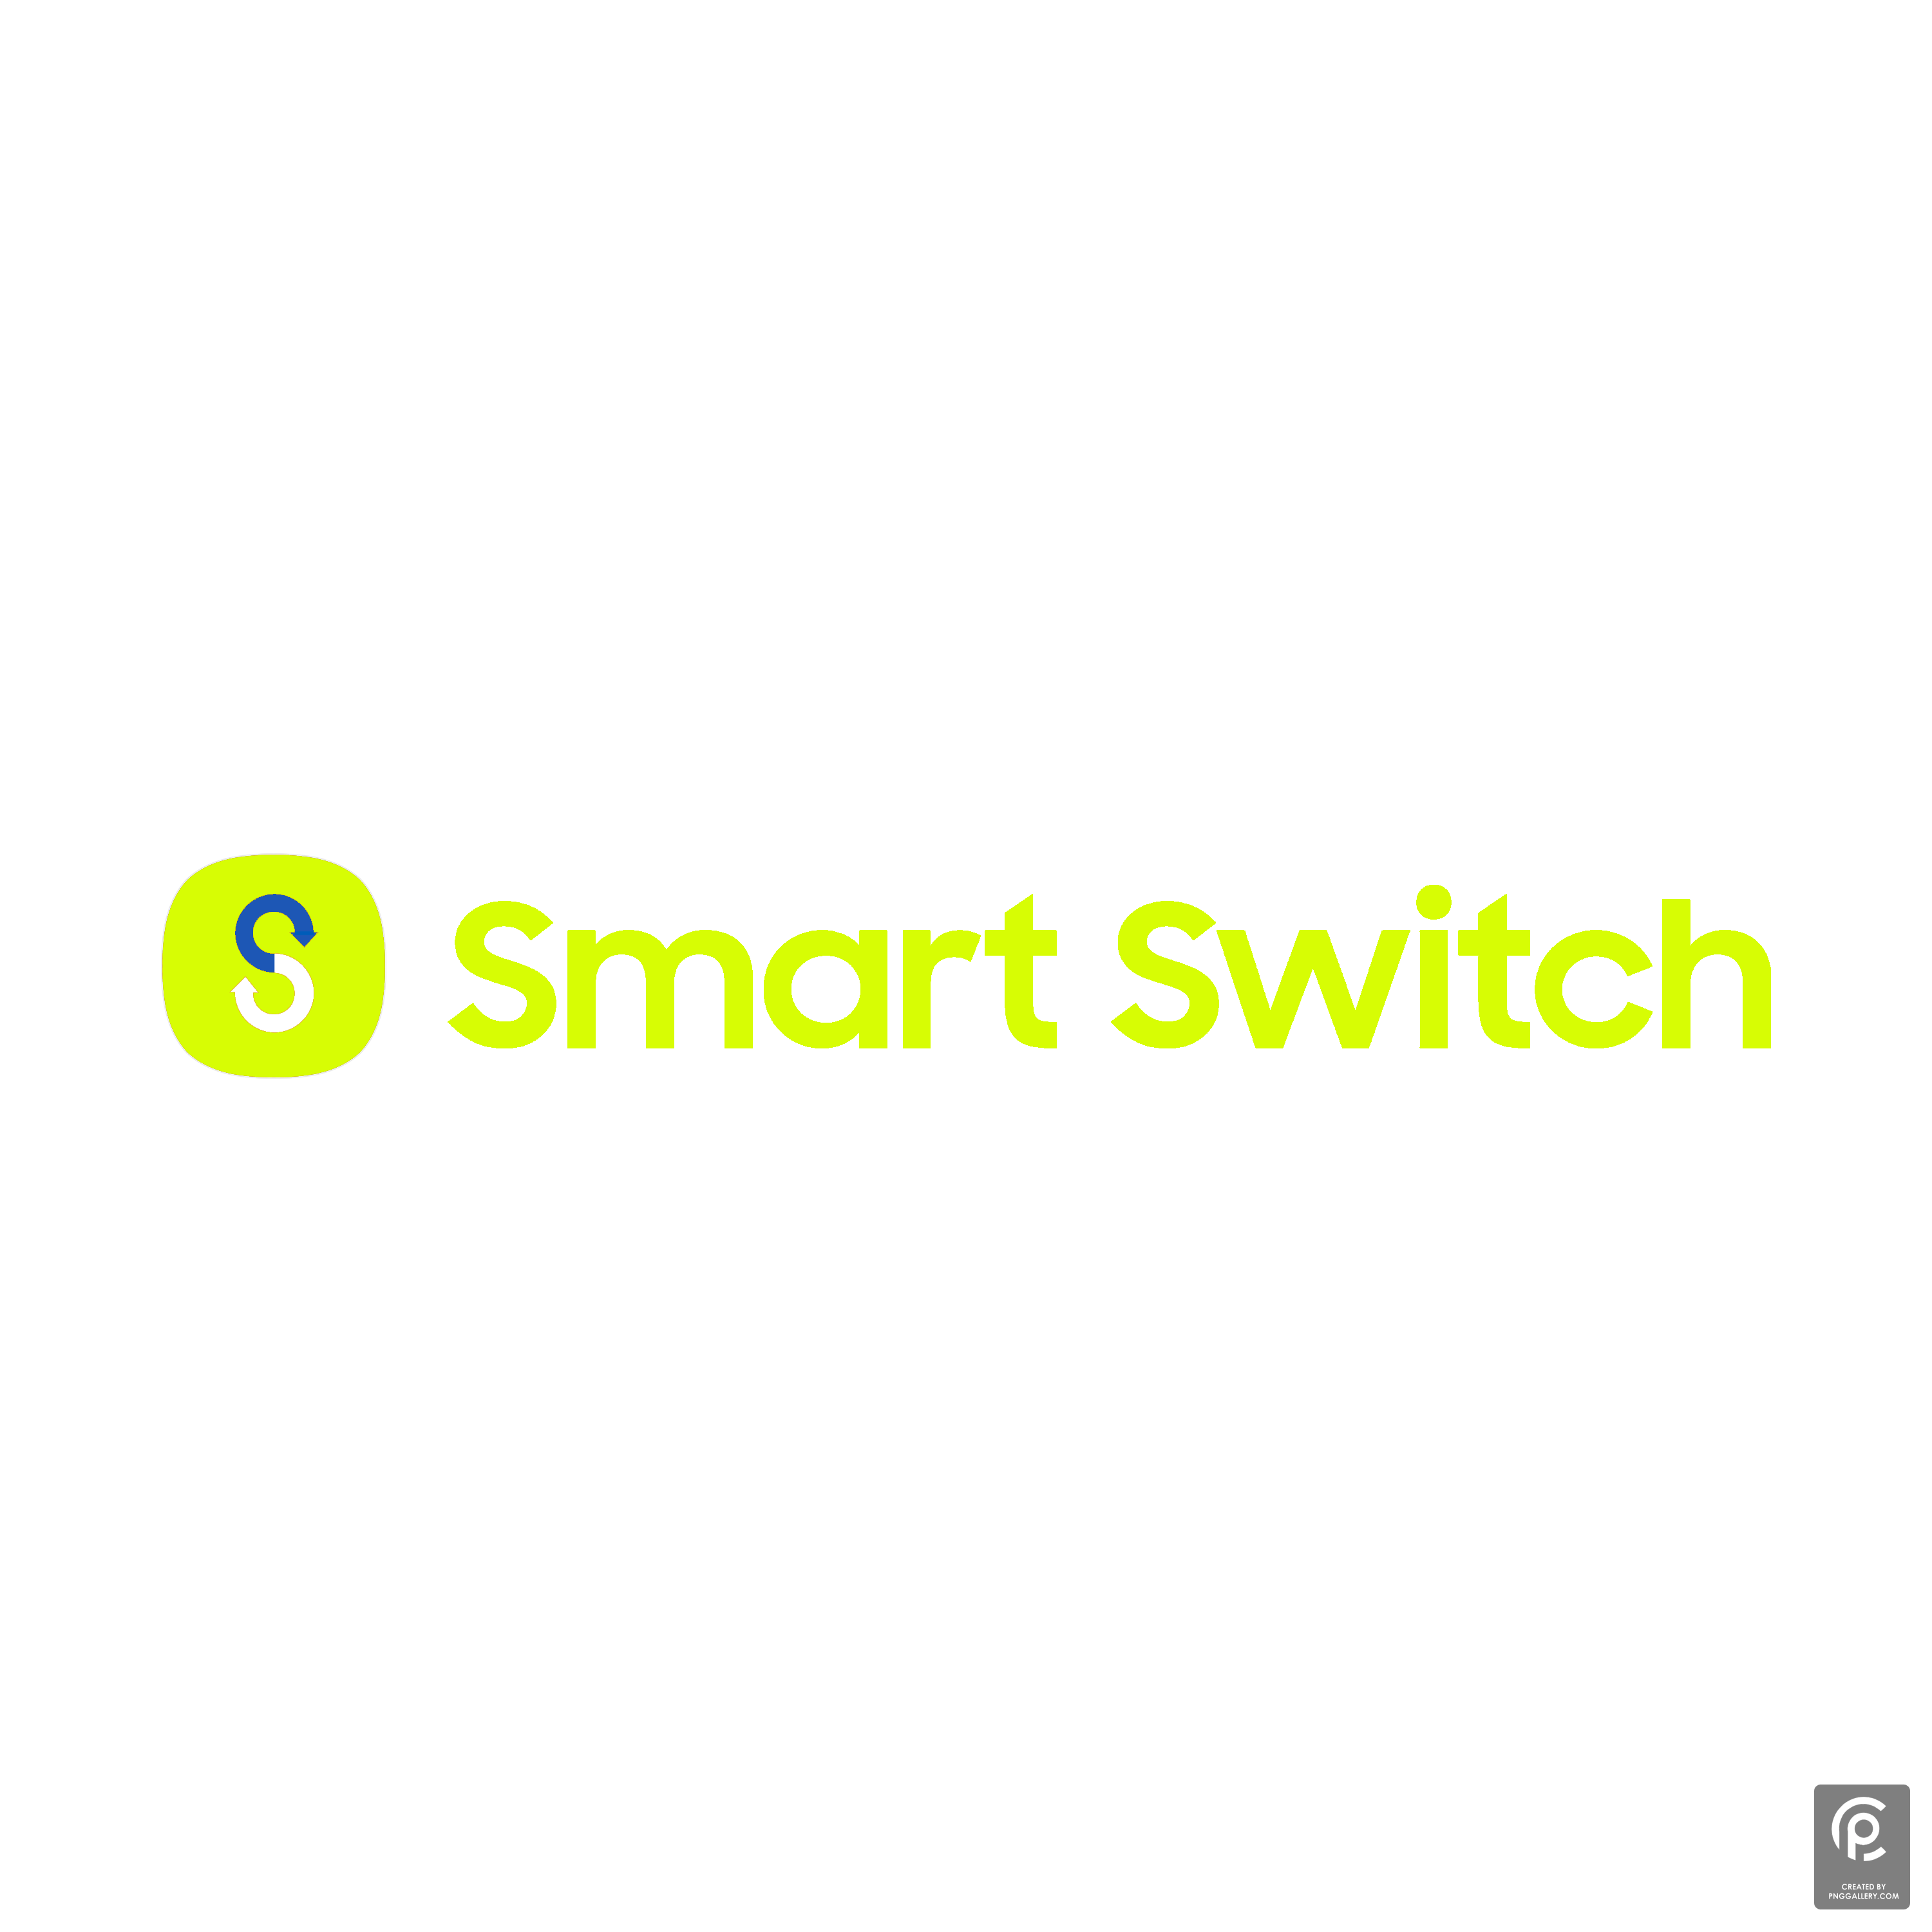 Samsung Smart Switch Logo Transparent Gallery